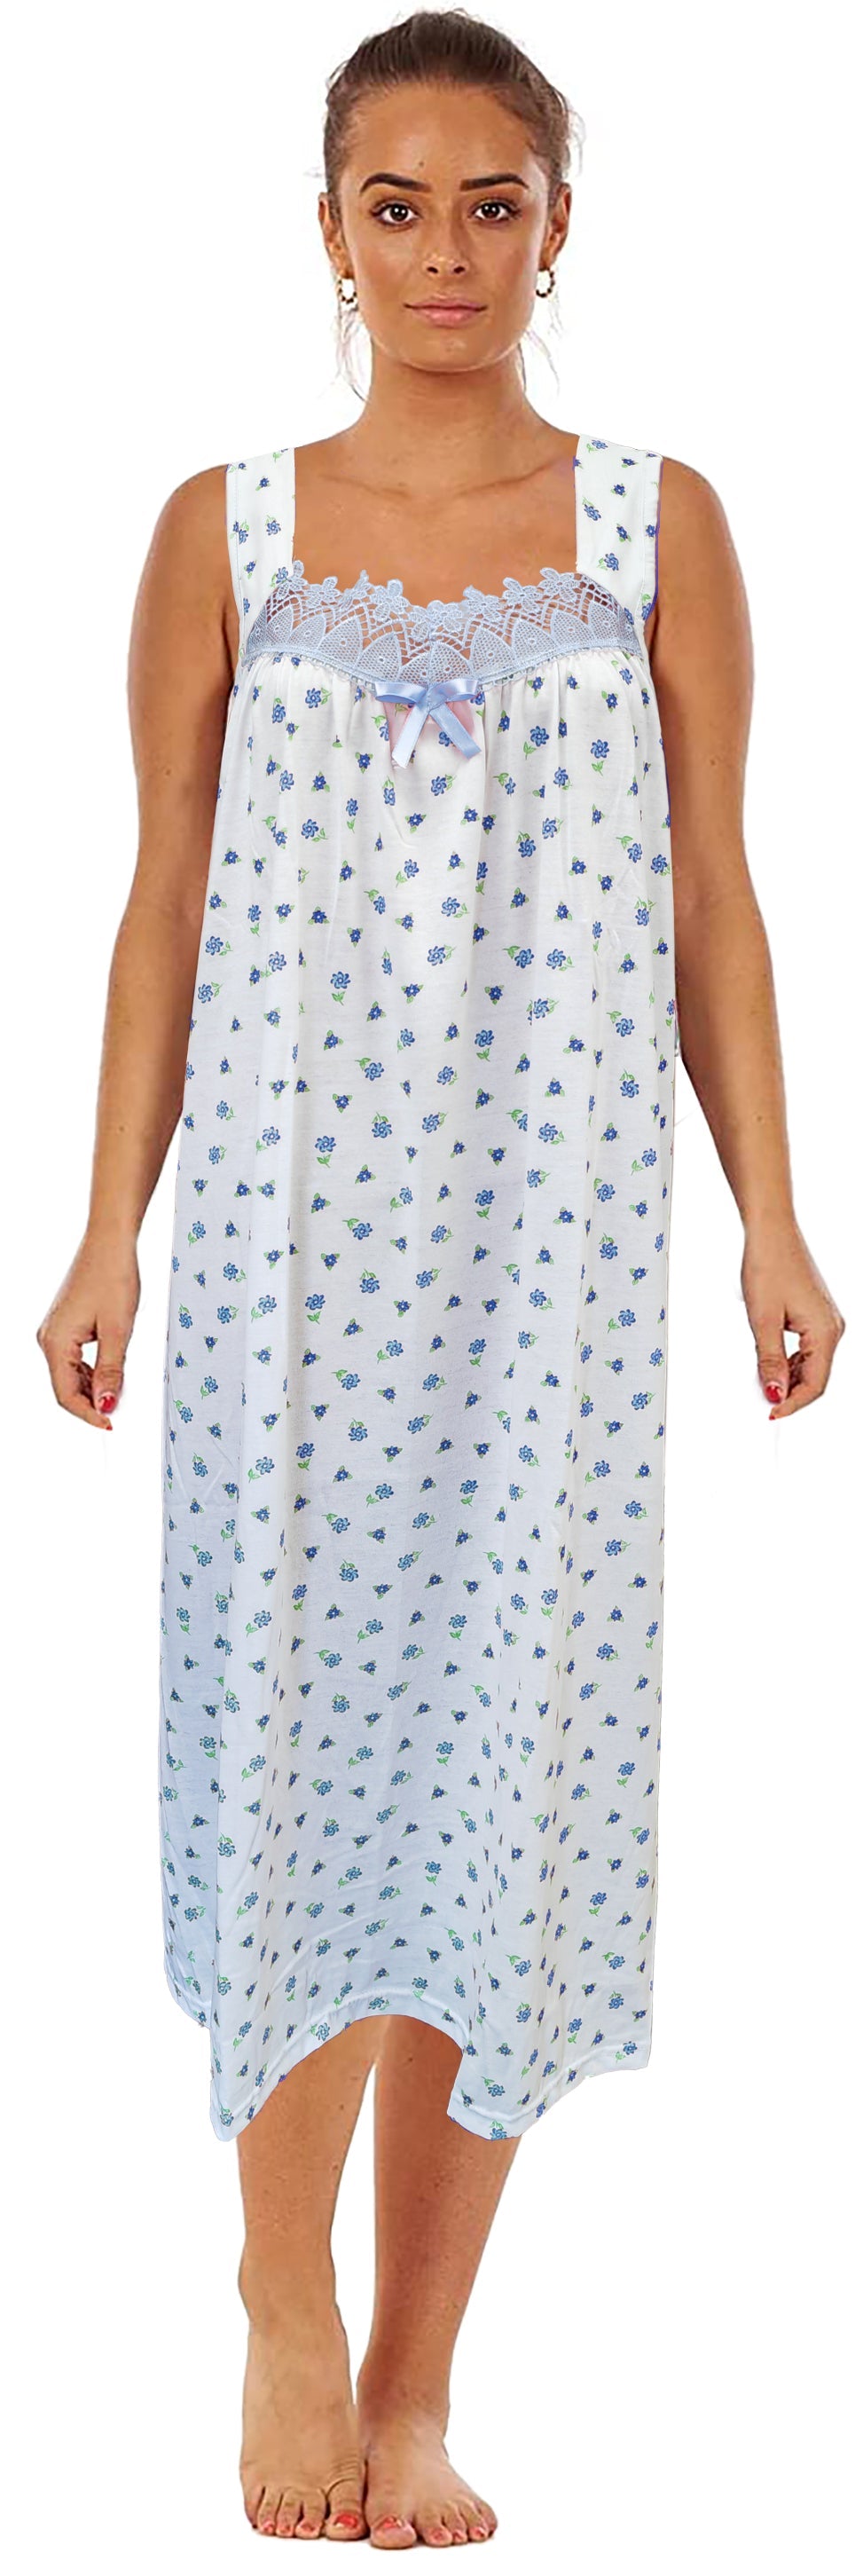 Trifolium Women Sleevless NightWear 100% Cotton Long Ladies Floral Print Nightdress